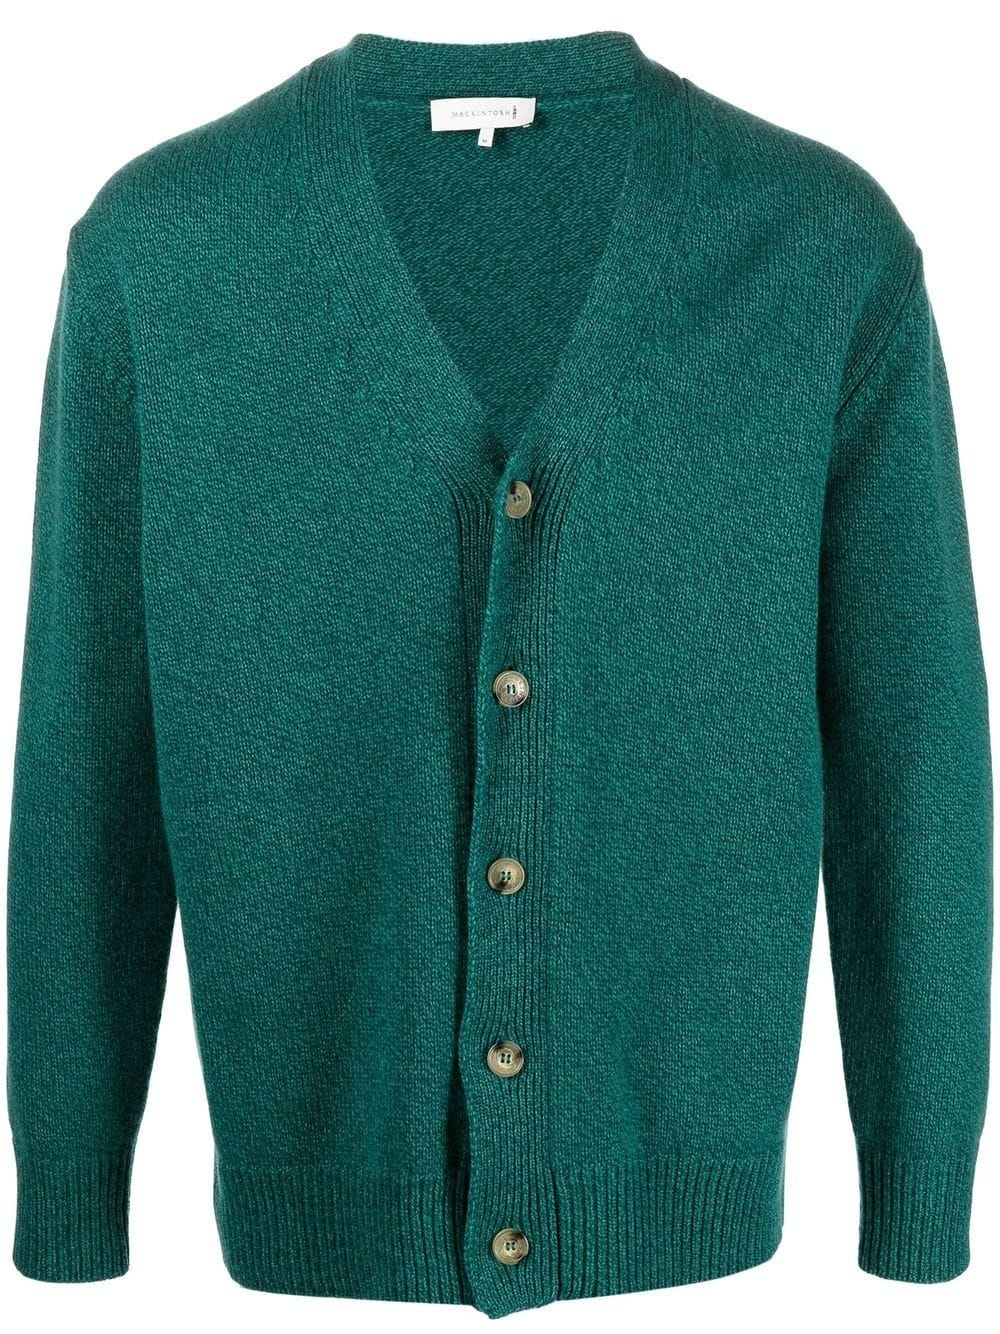 STOCKHOLM Dark Green Merino Wool & Cashmere Cardigan - 1